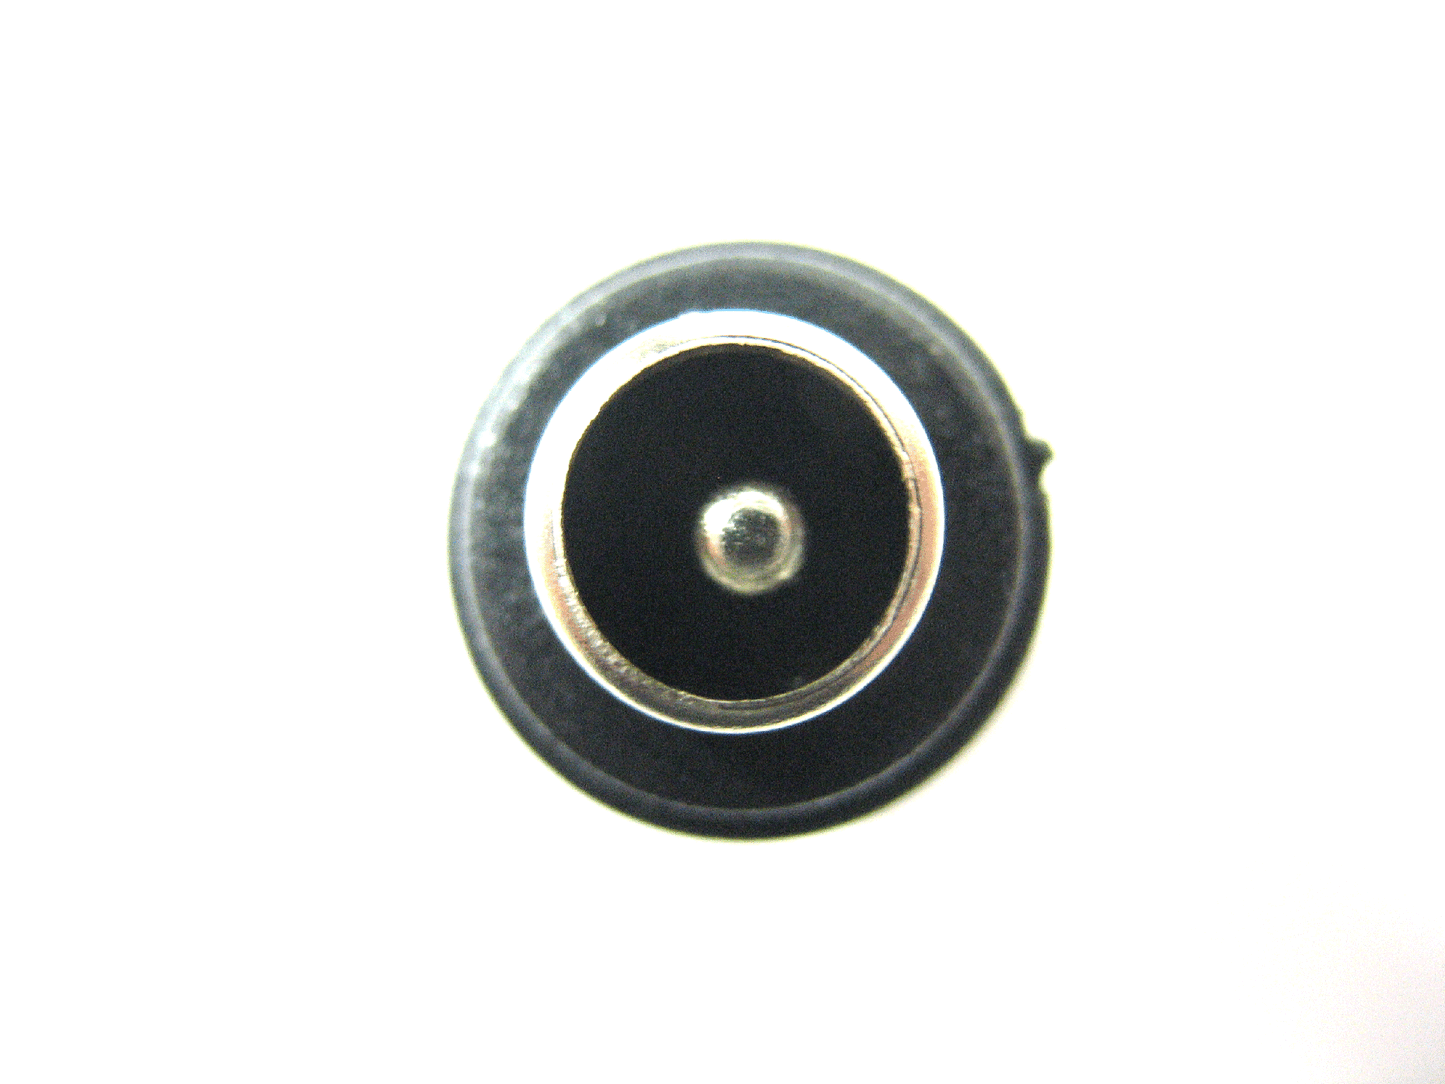 2.1mm x 5.5mm to 1.35mm x 3.5mm DC Power Plug Adaptor